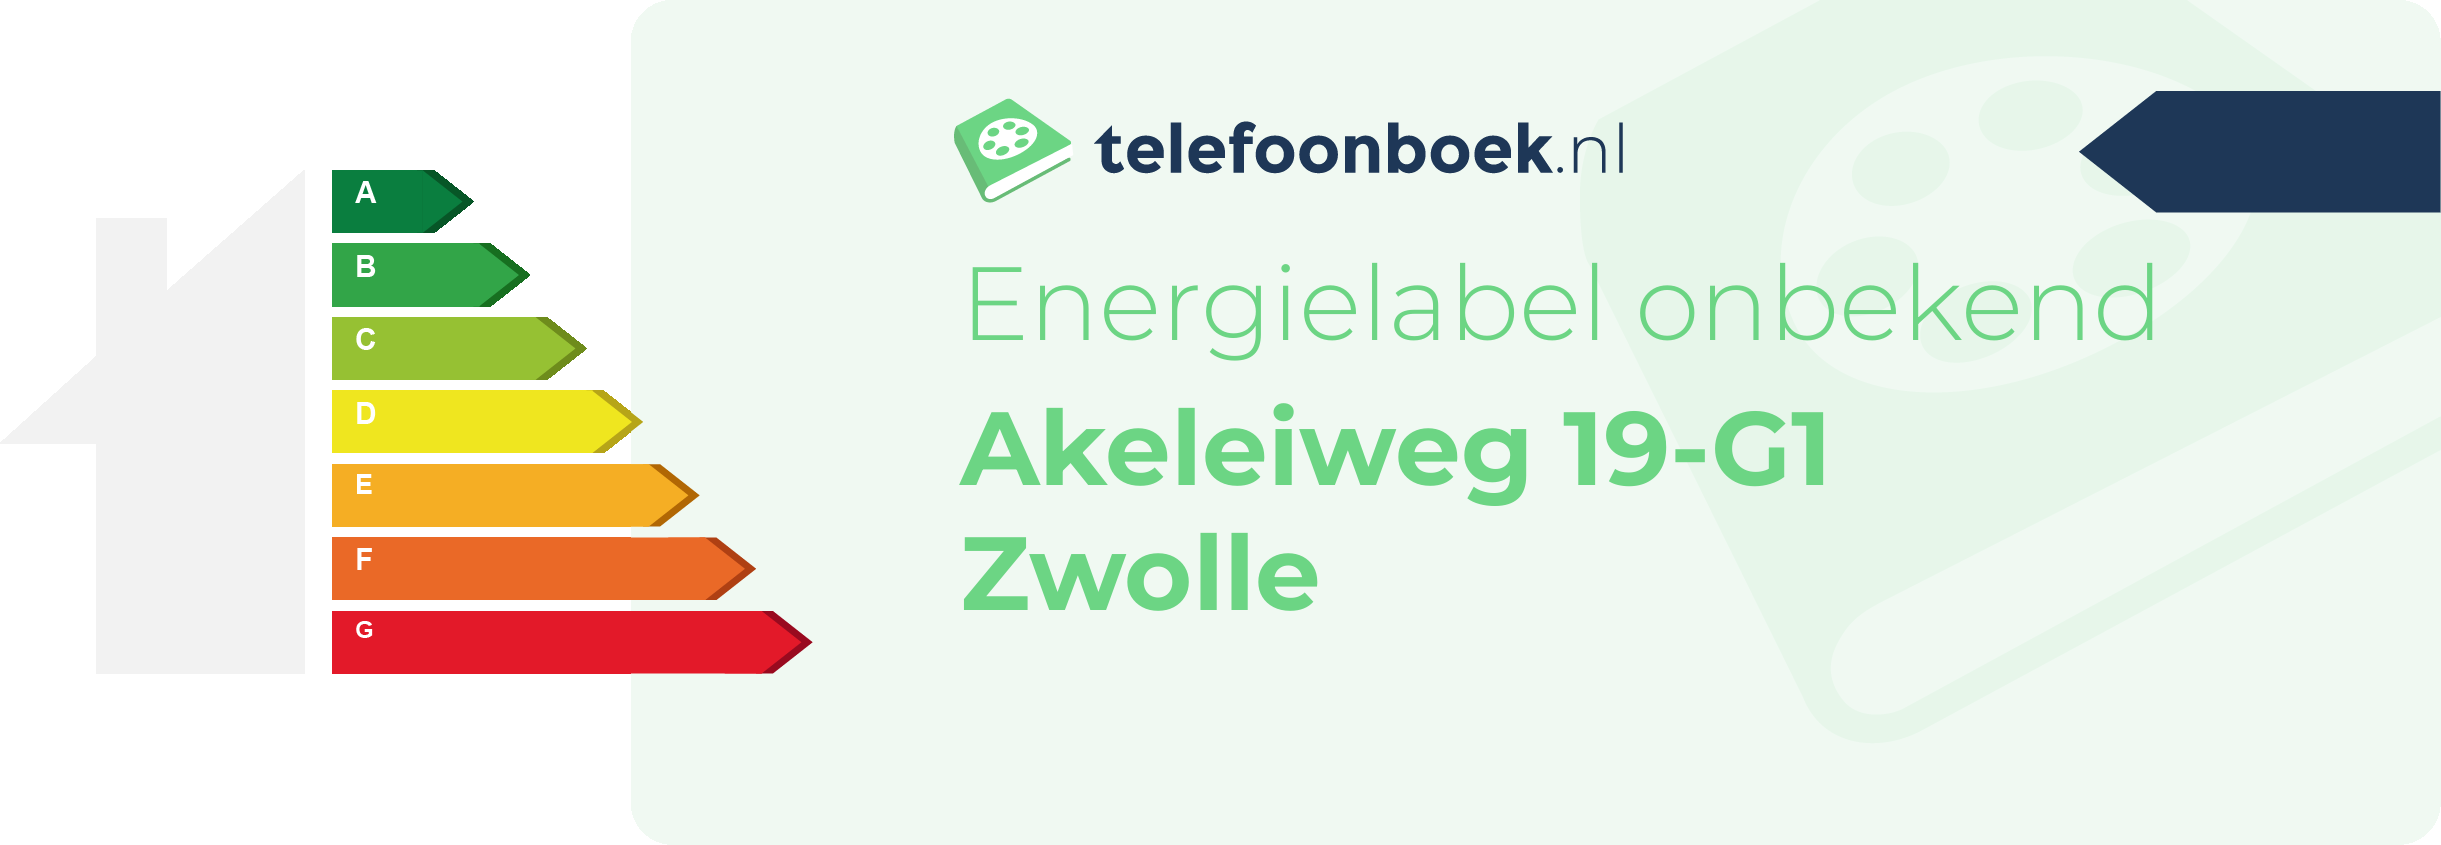 Energielabel Akeleiweg 19-G1 Zwolle